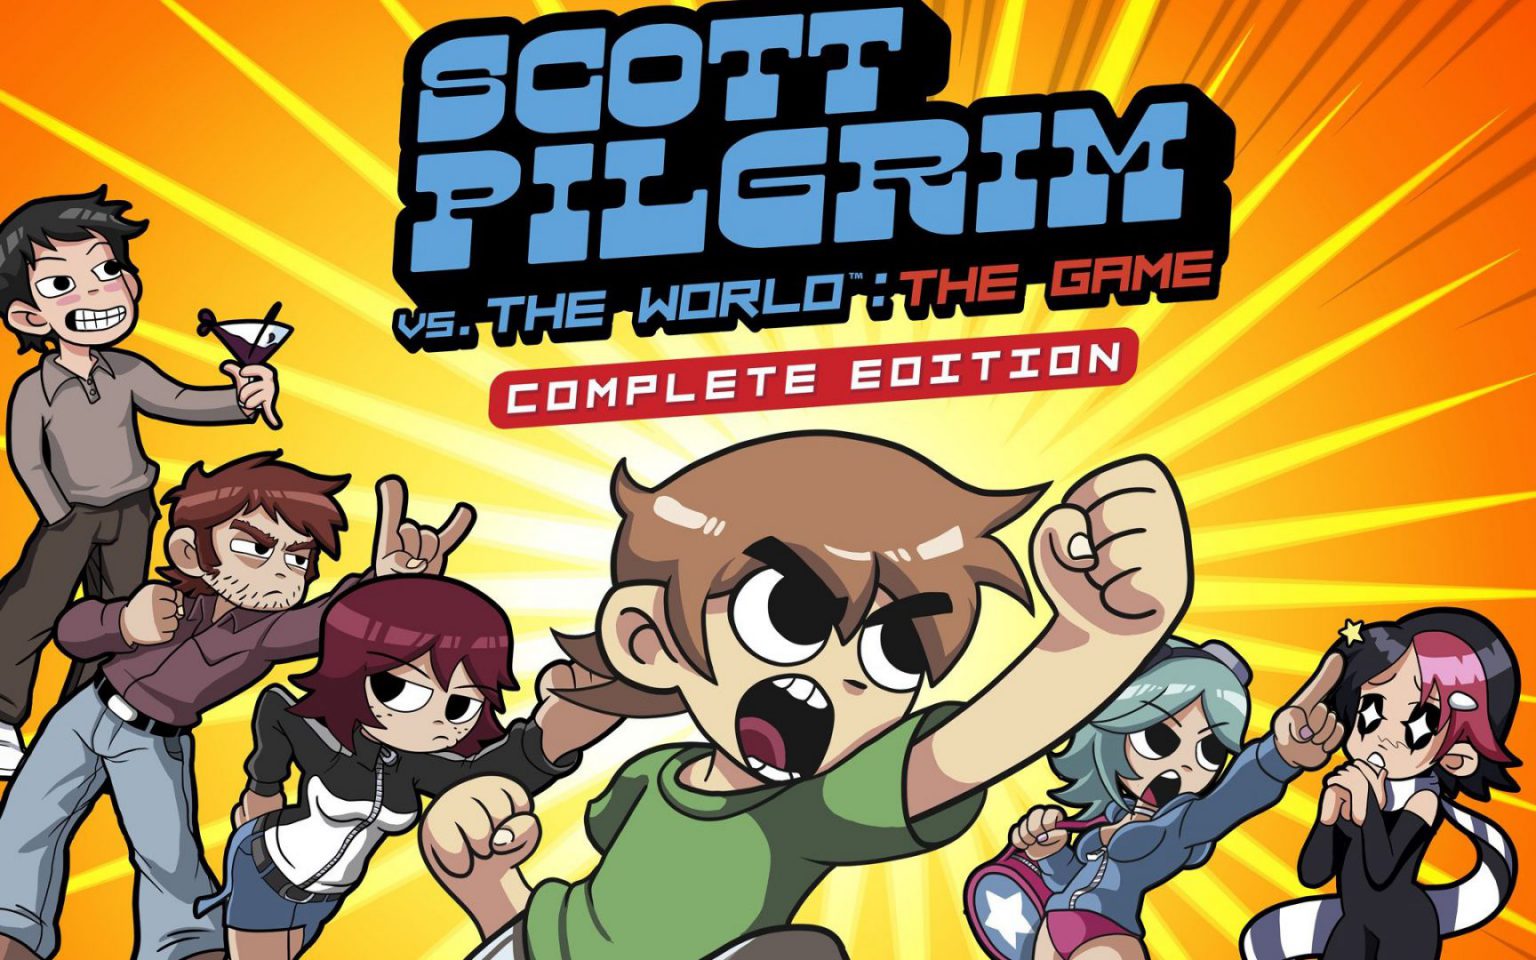 scott pilgrim vs the world: the game - generacion xbox